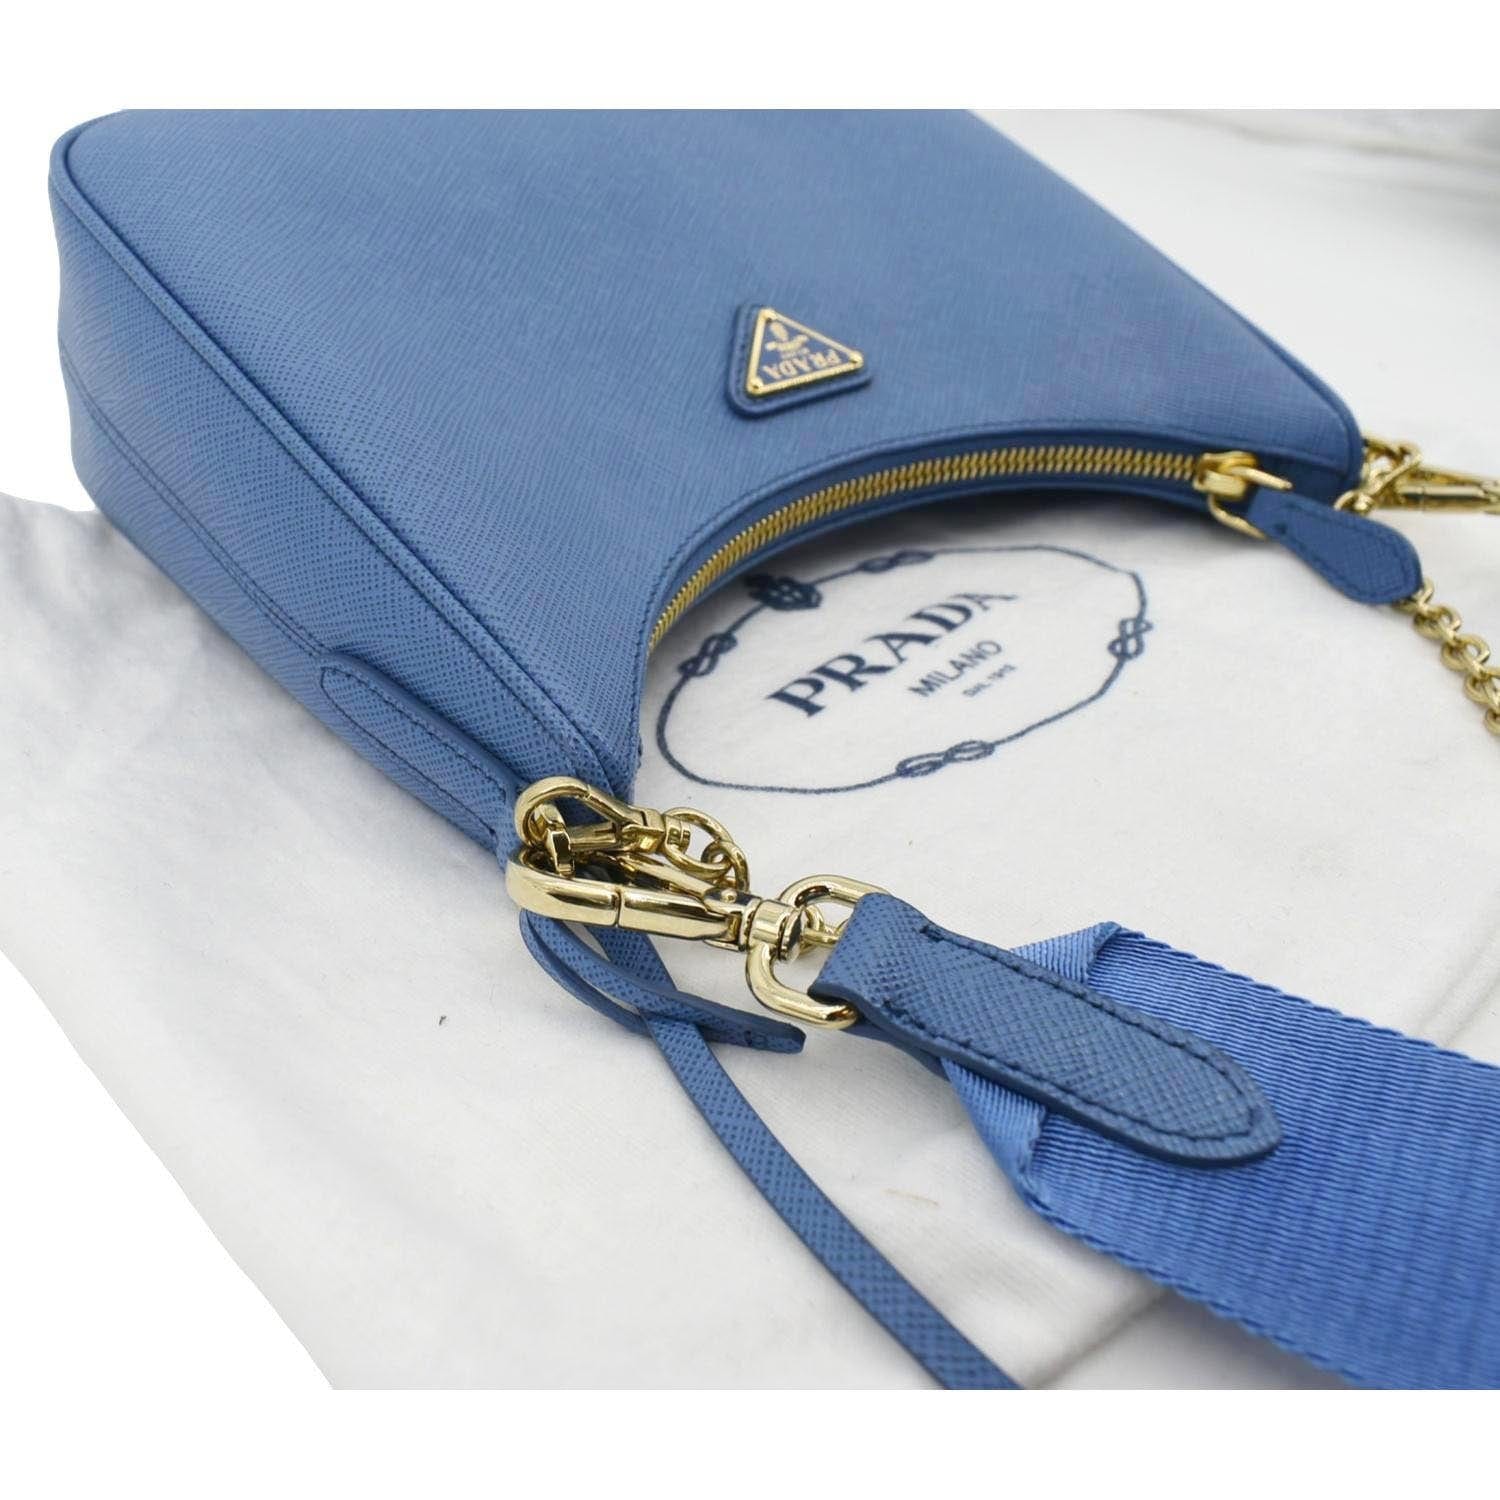 Prada Re-Edition 2005 mini bag, Blue